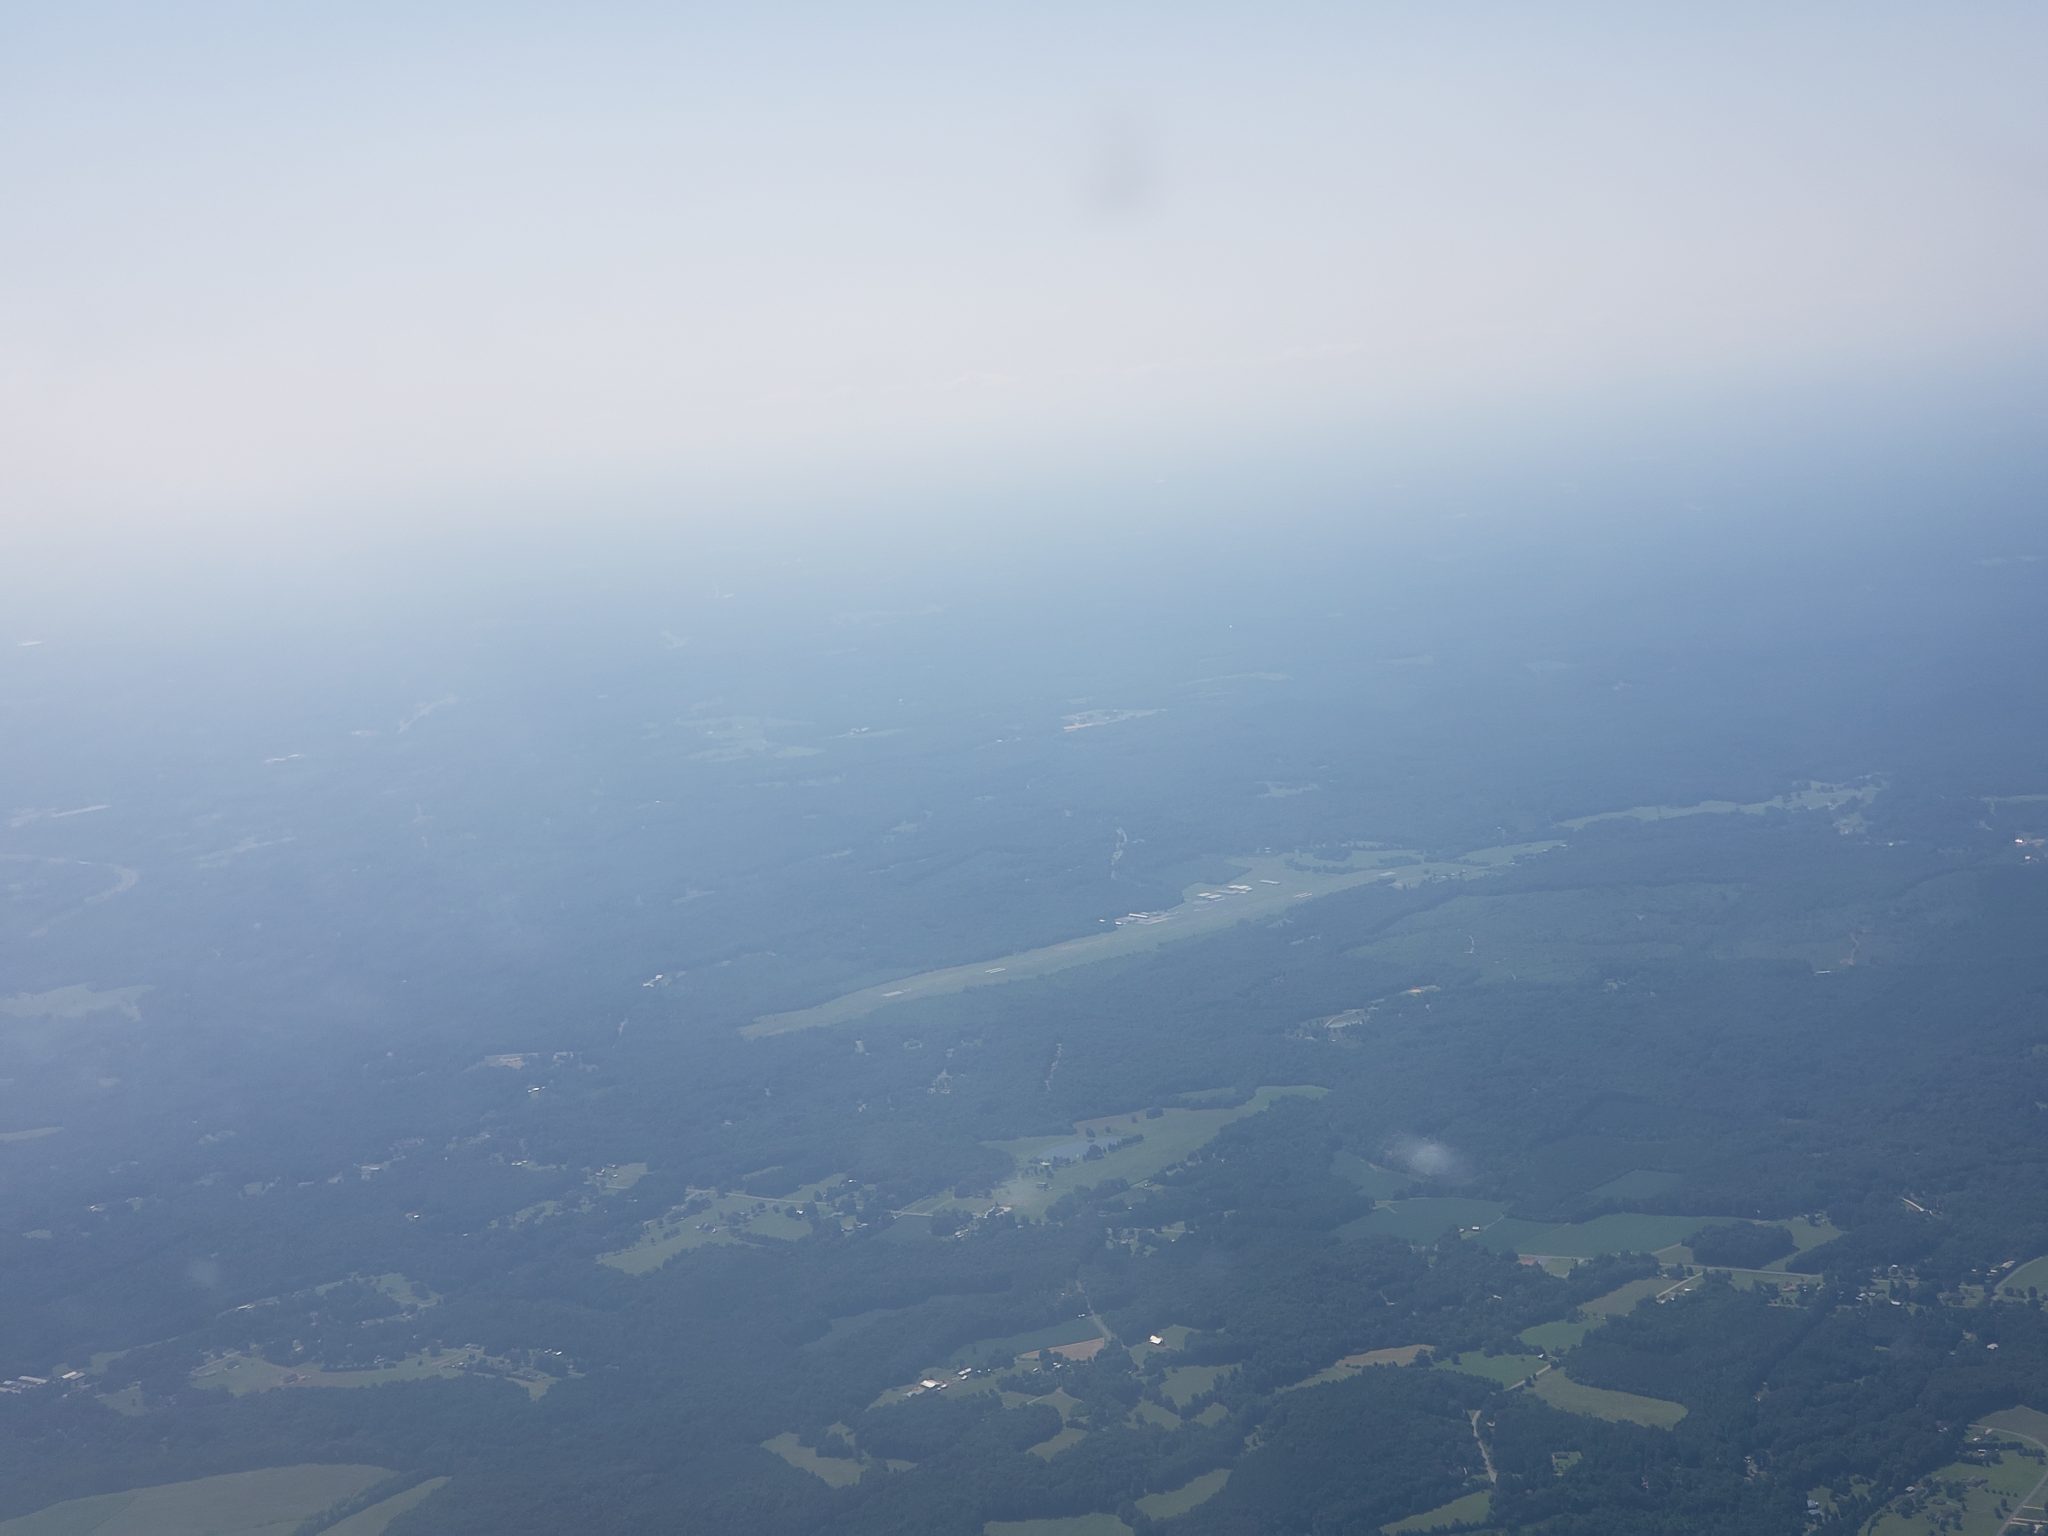 Hazy sky with a runway a couple miles away.